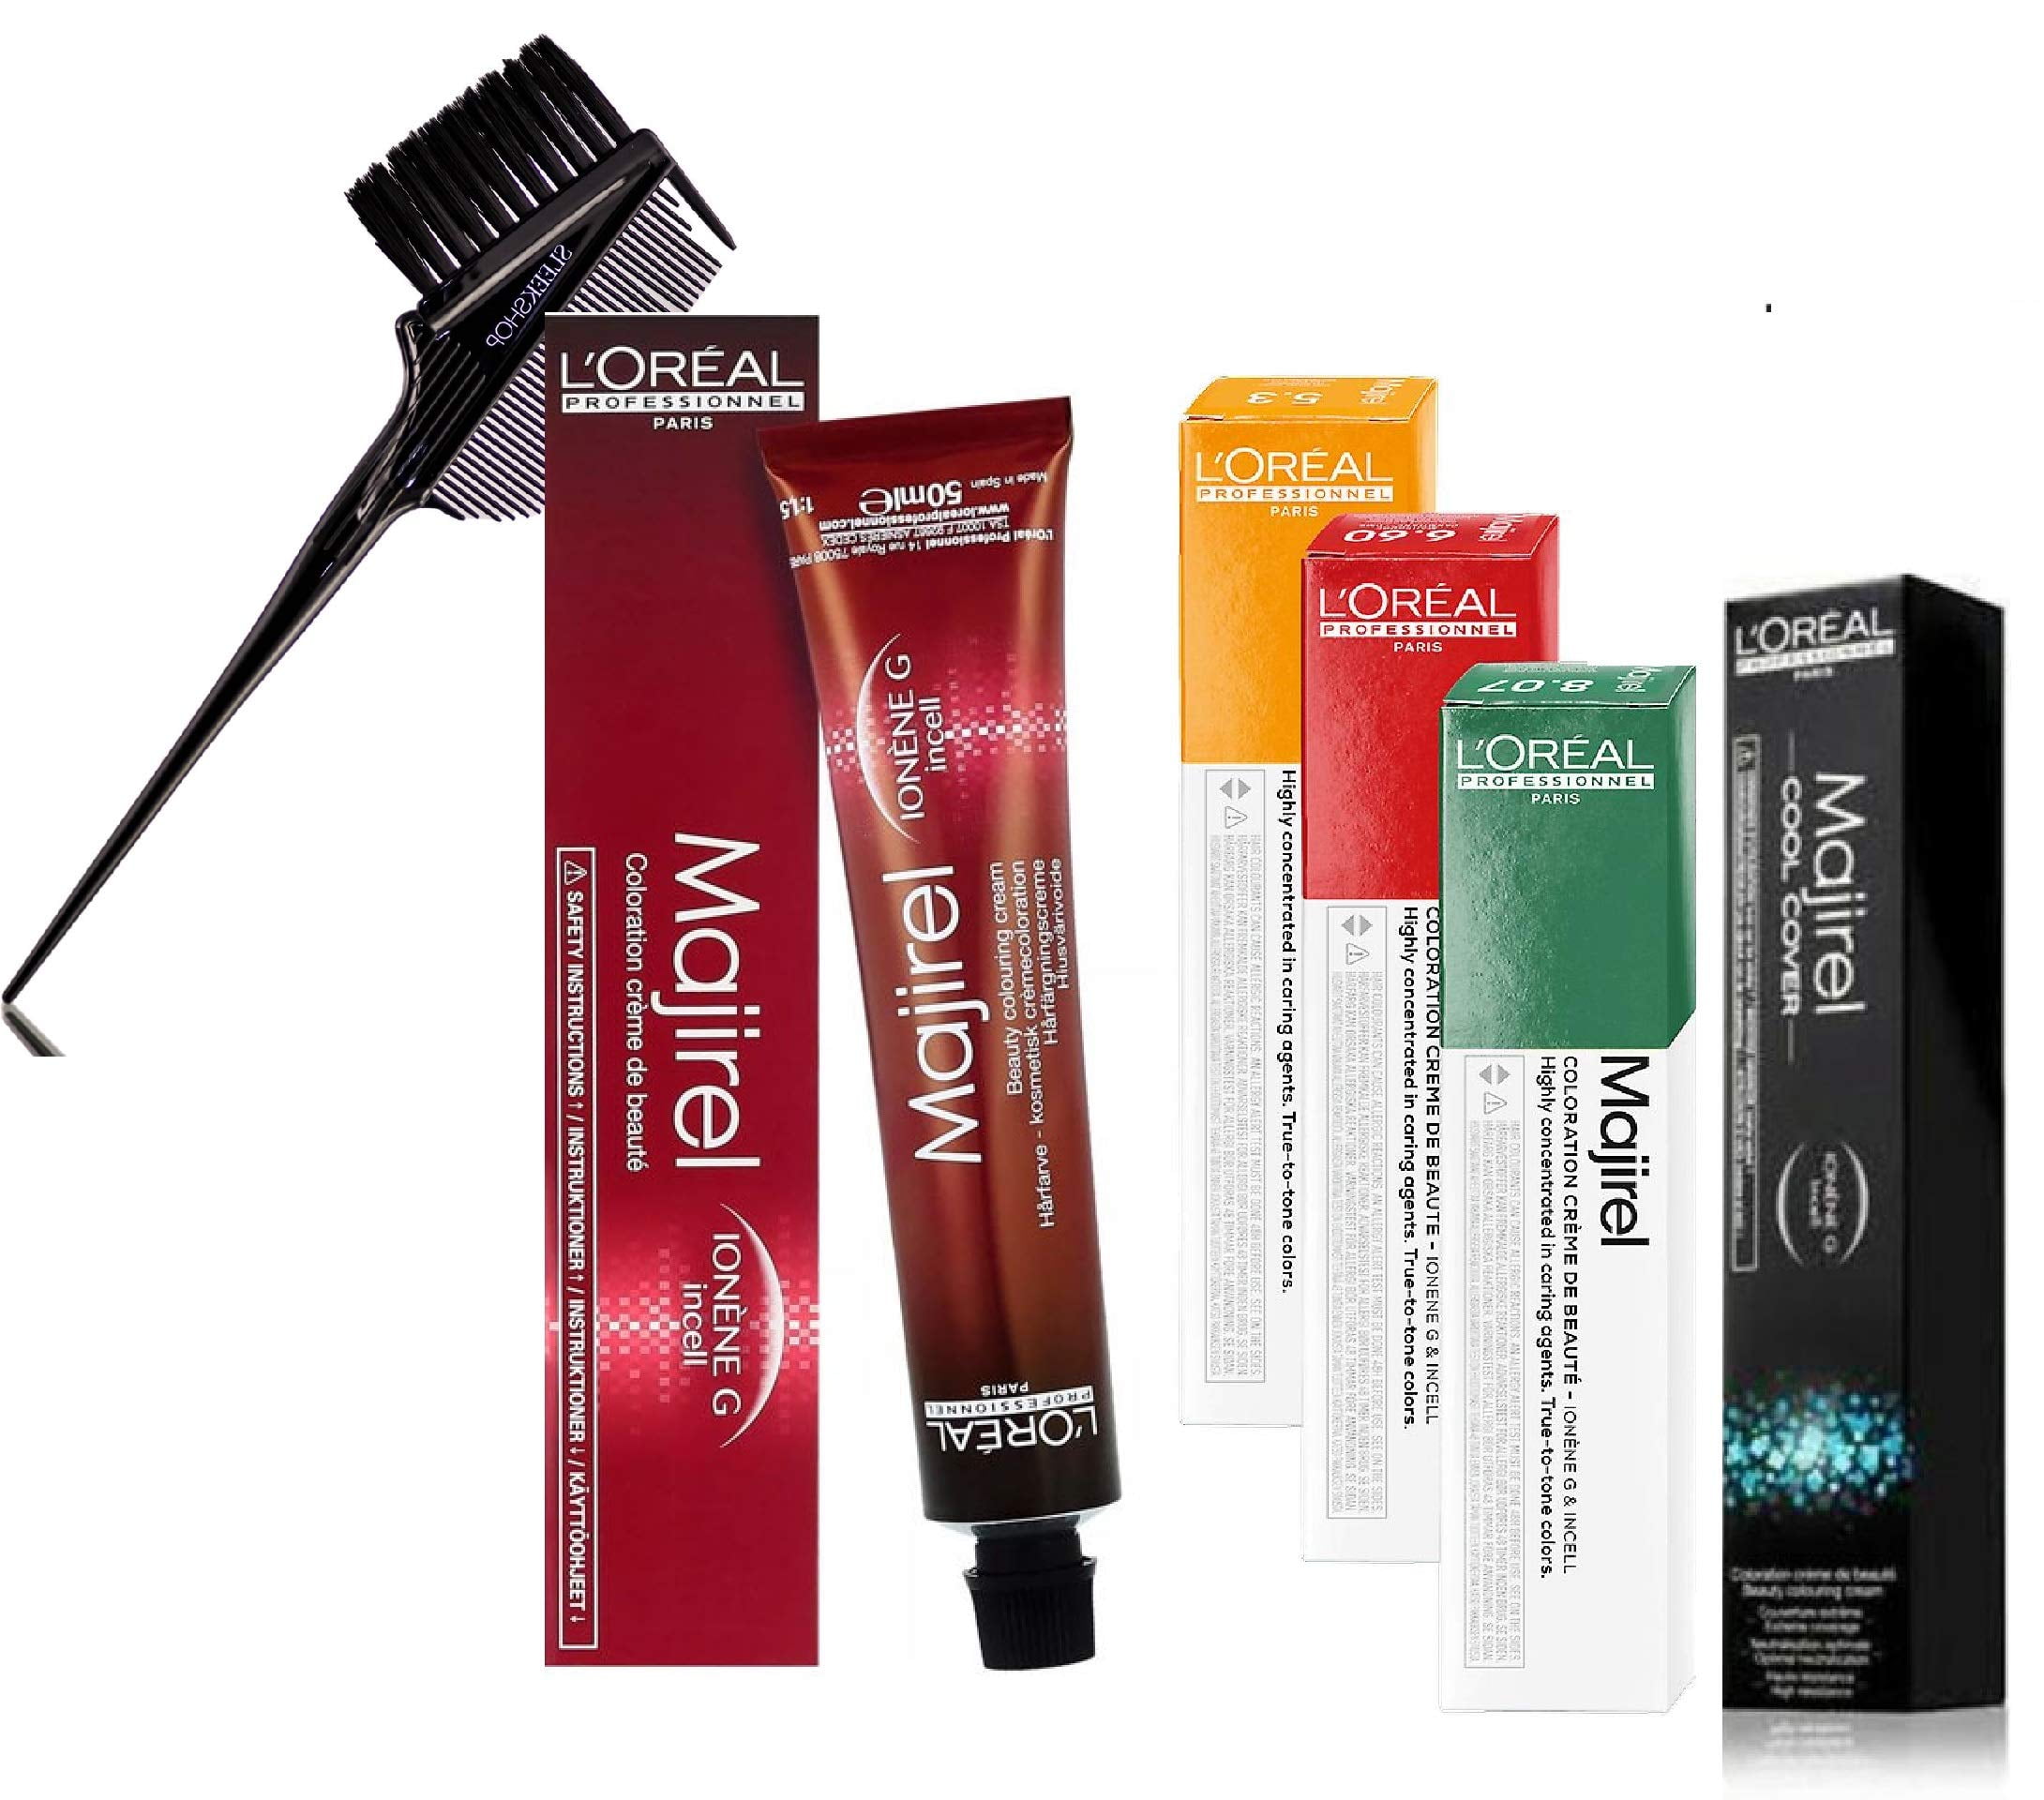  / 7G , L'OREAL MAJIREL Original PRO Colours Ionene G Beauty Permanent  Cream Hair Color Creme Haircolor Dye Loreal - Pack of 2 w/ Sleek 3-in-1  Brush Comb 